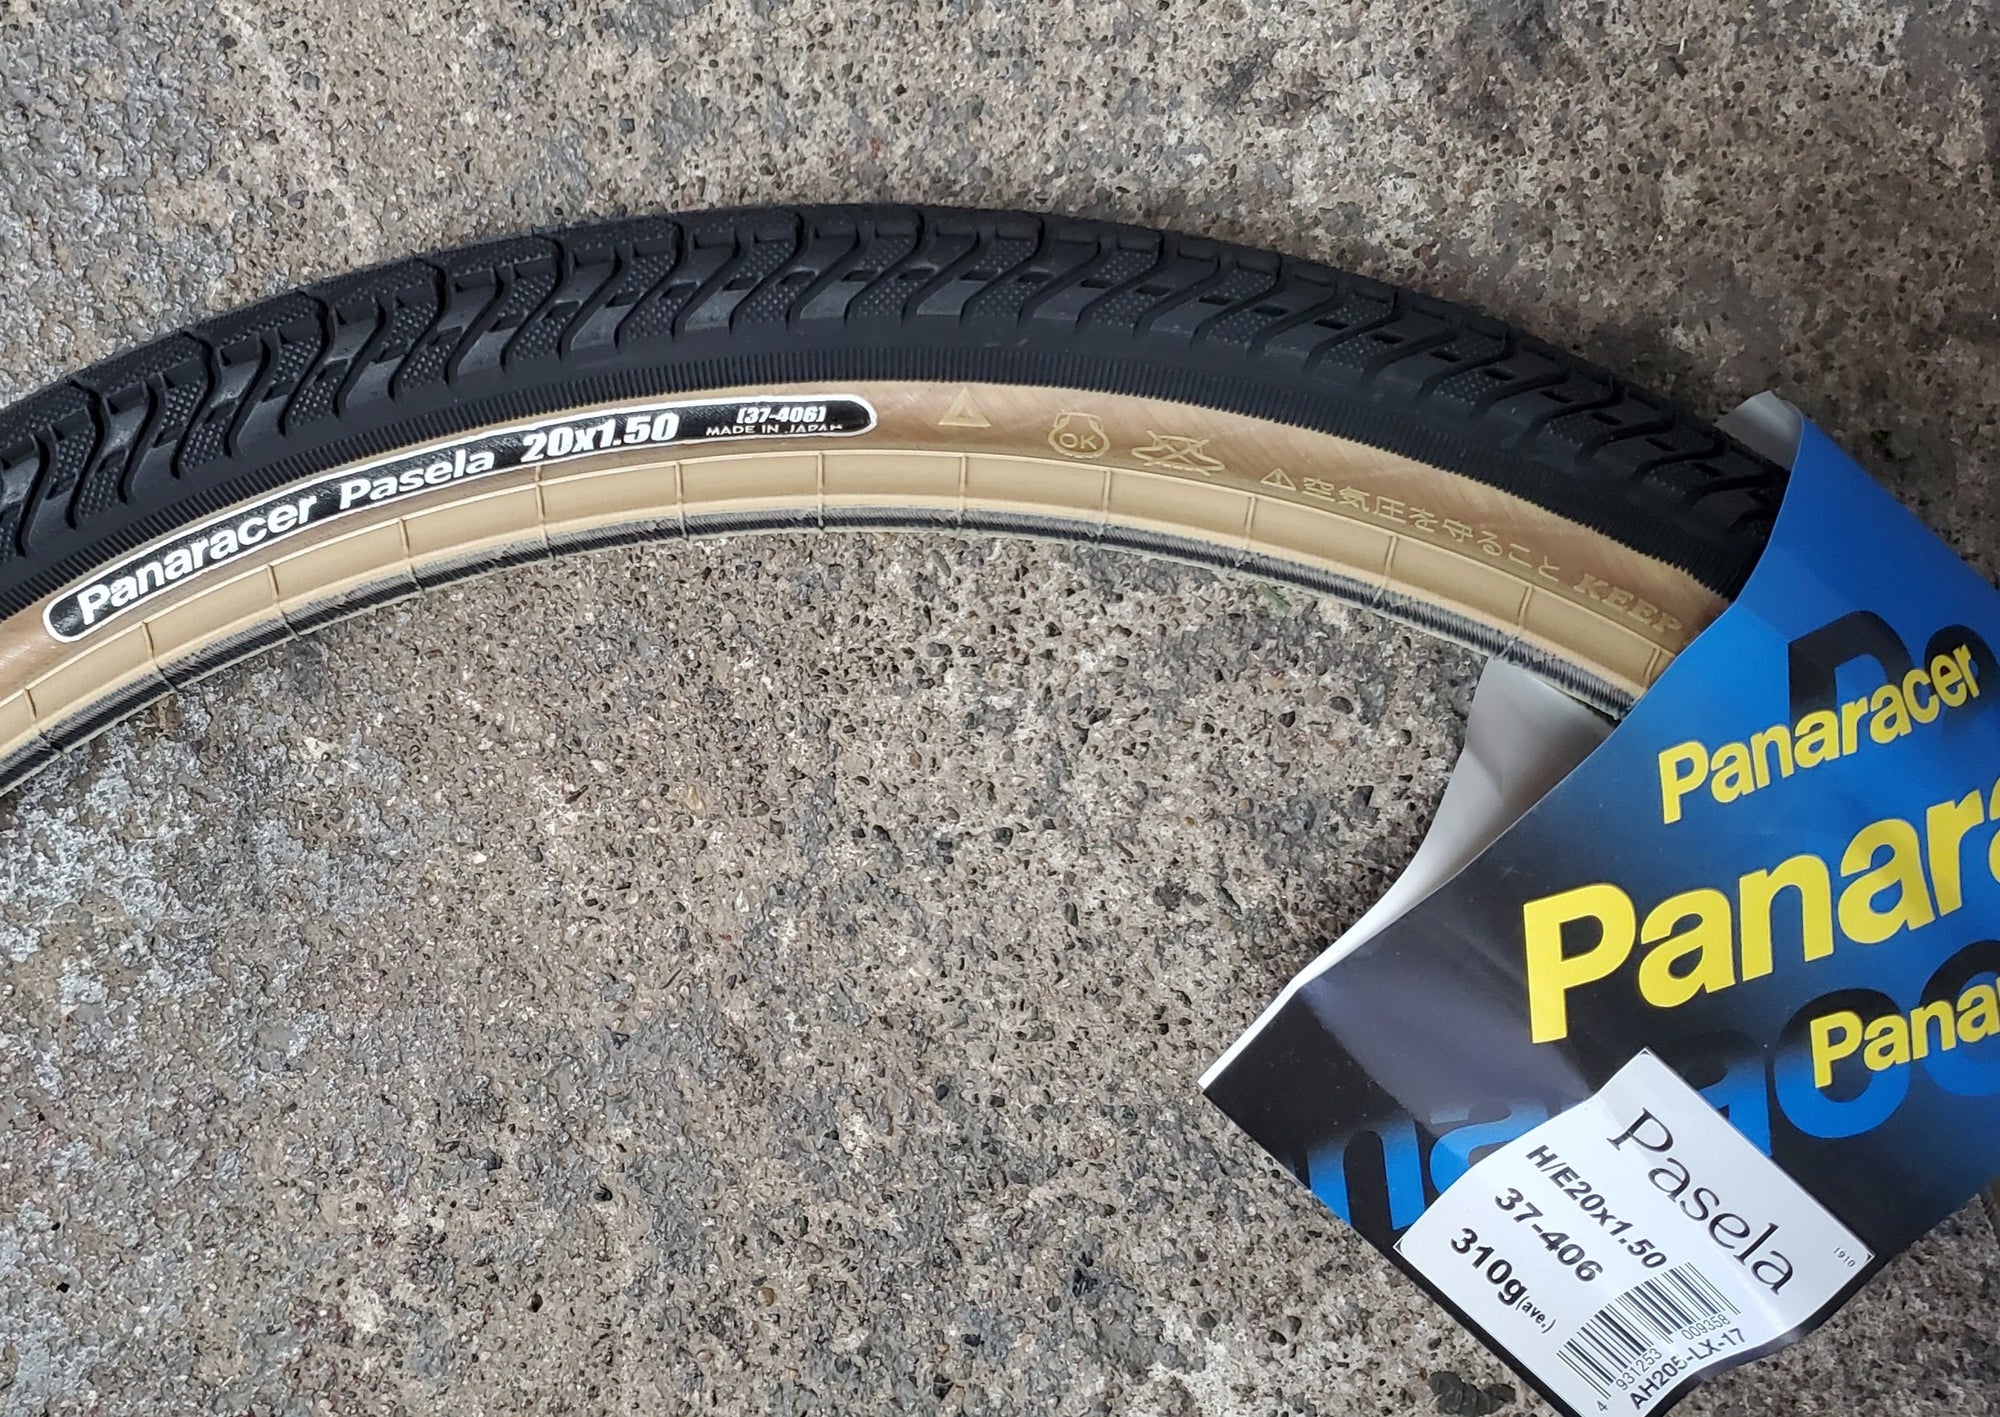 20x1.50 Panaracer Pasela BMX tire -  Black w/ skinwall